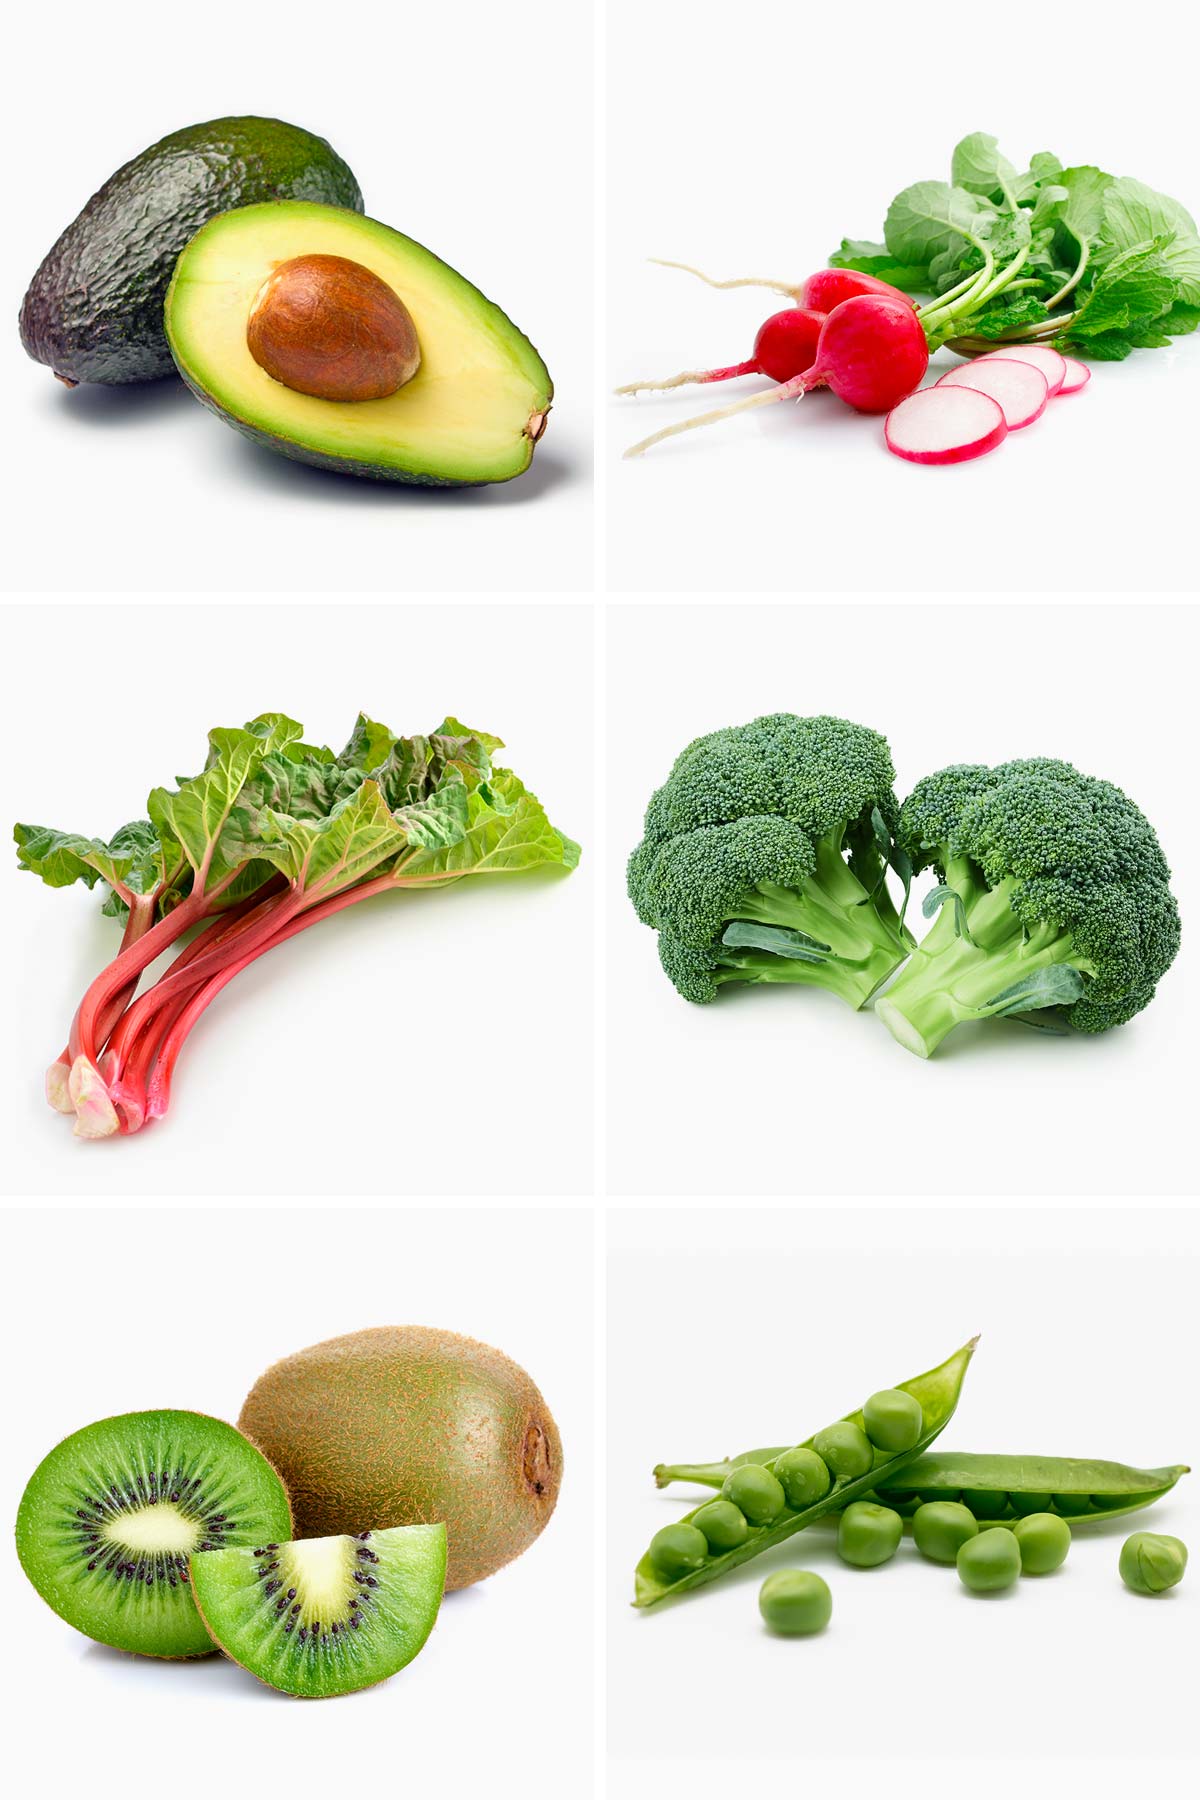 6 different produce items (avocado, radish, rhubarb, broccoli, kiwi, and peas) in season in April.